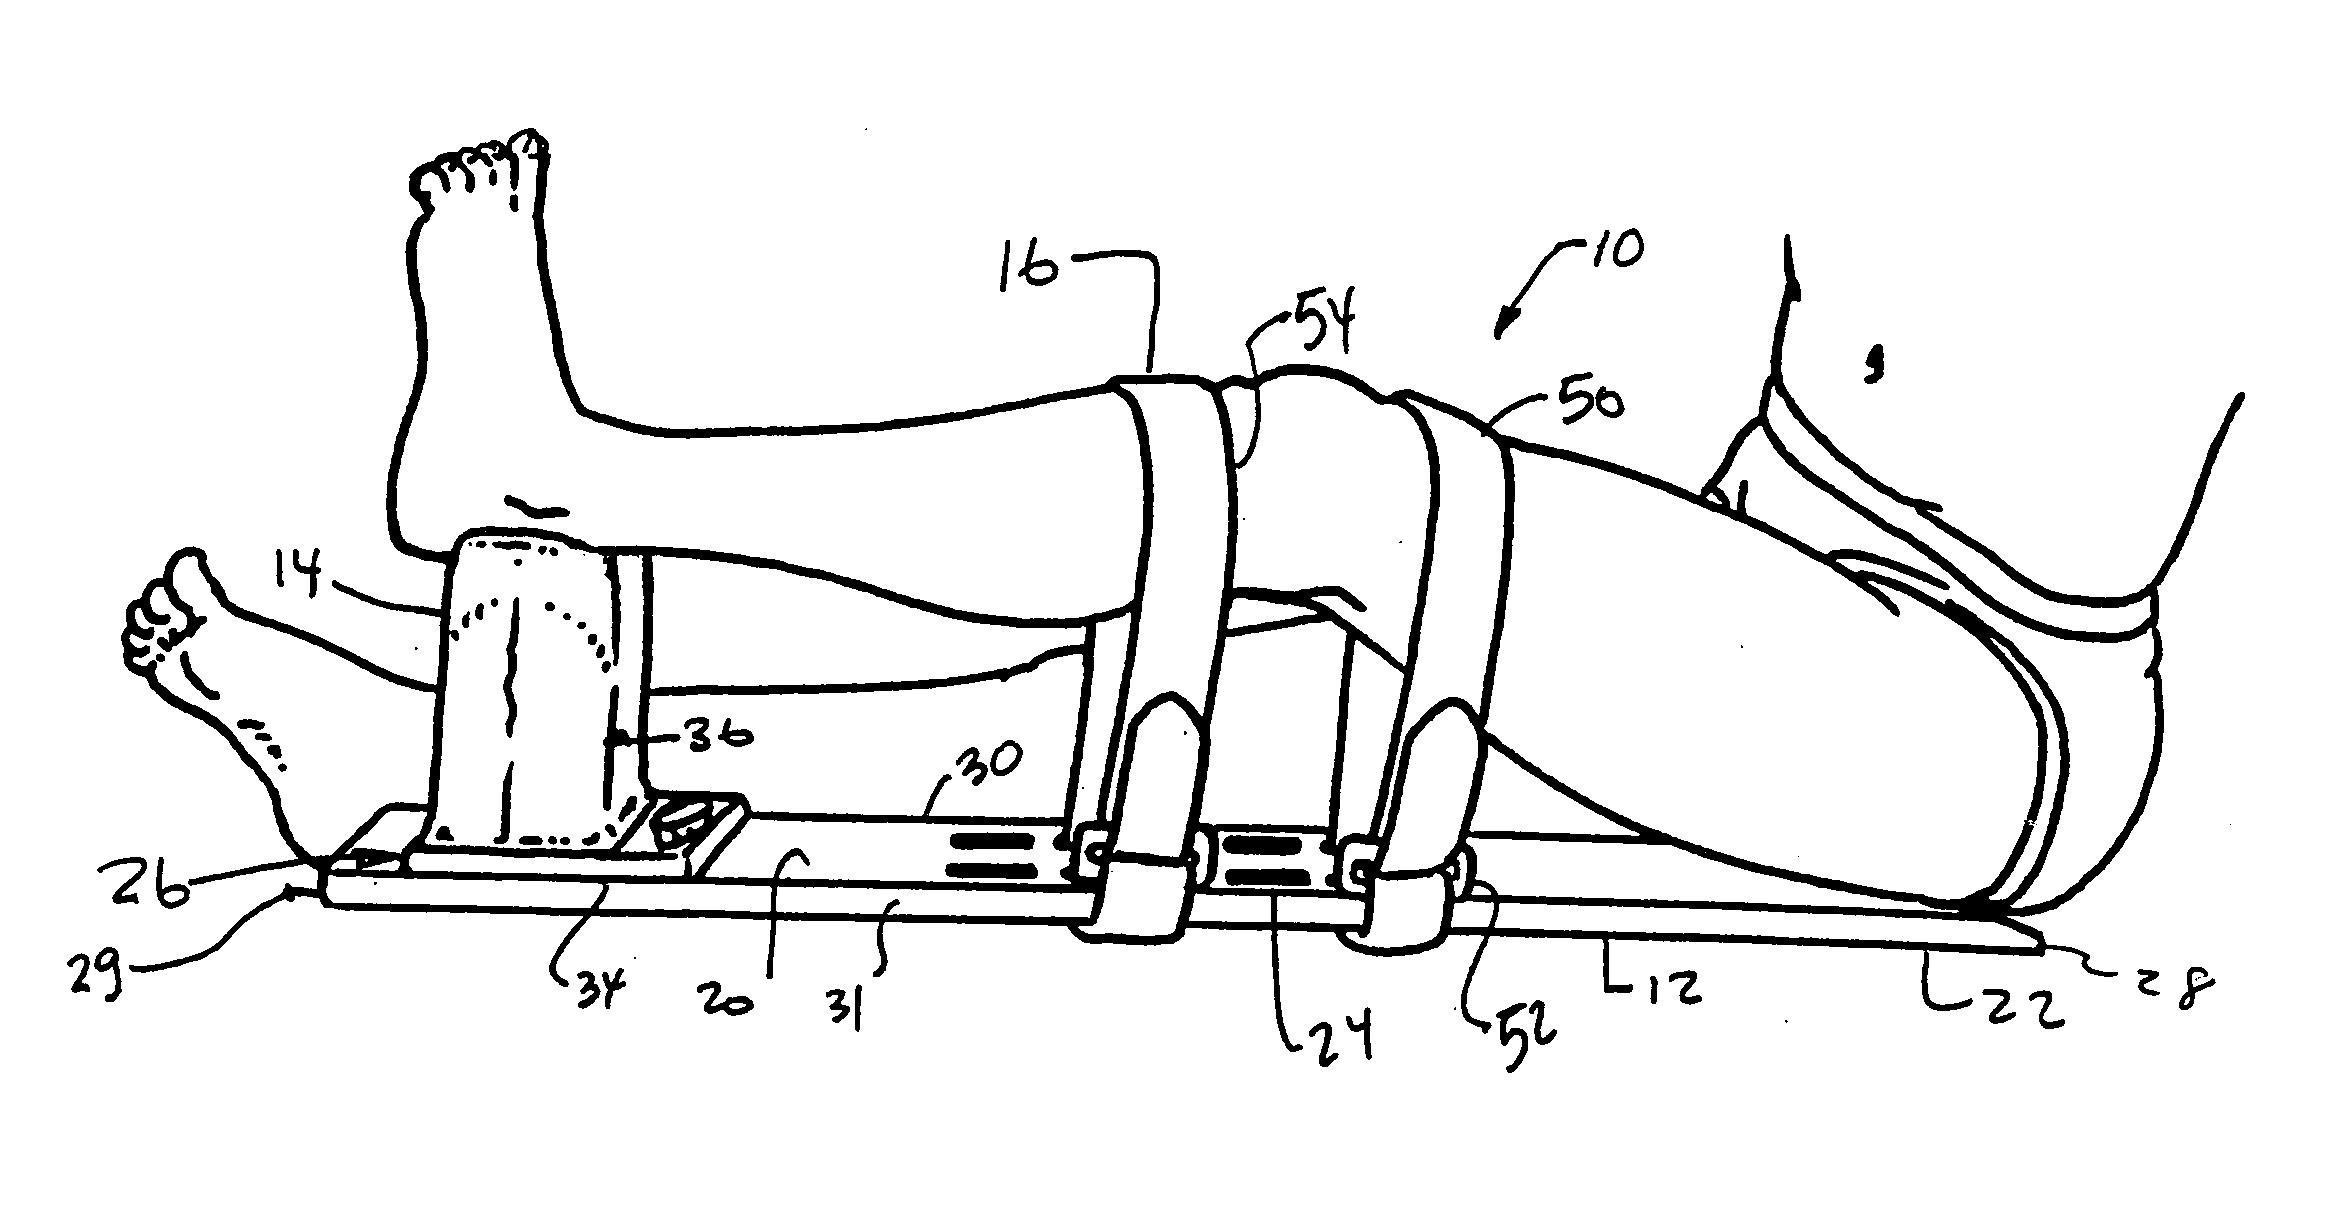 Knee extension apparatus